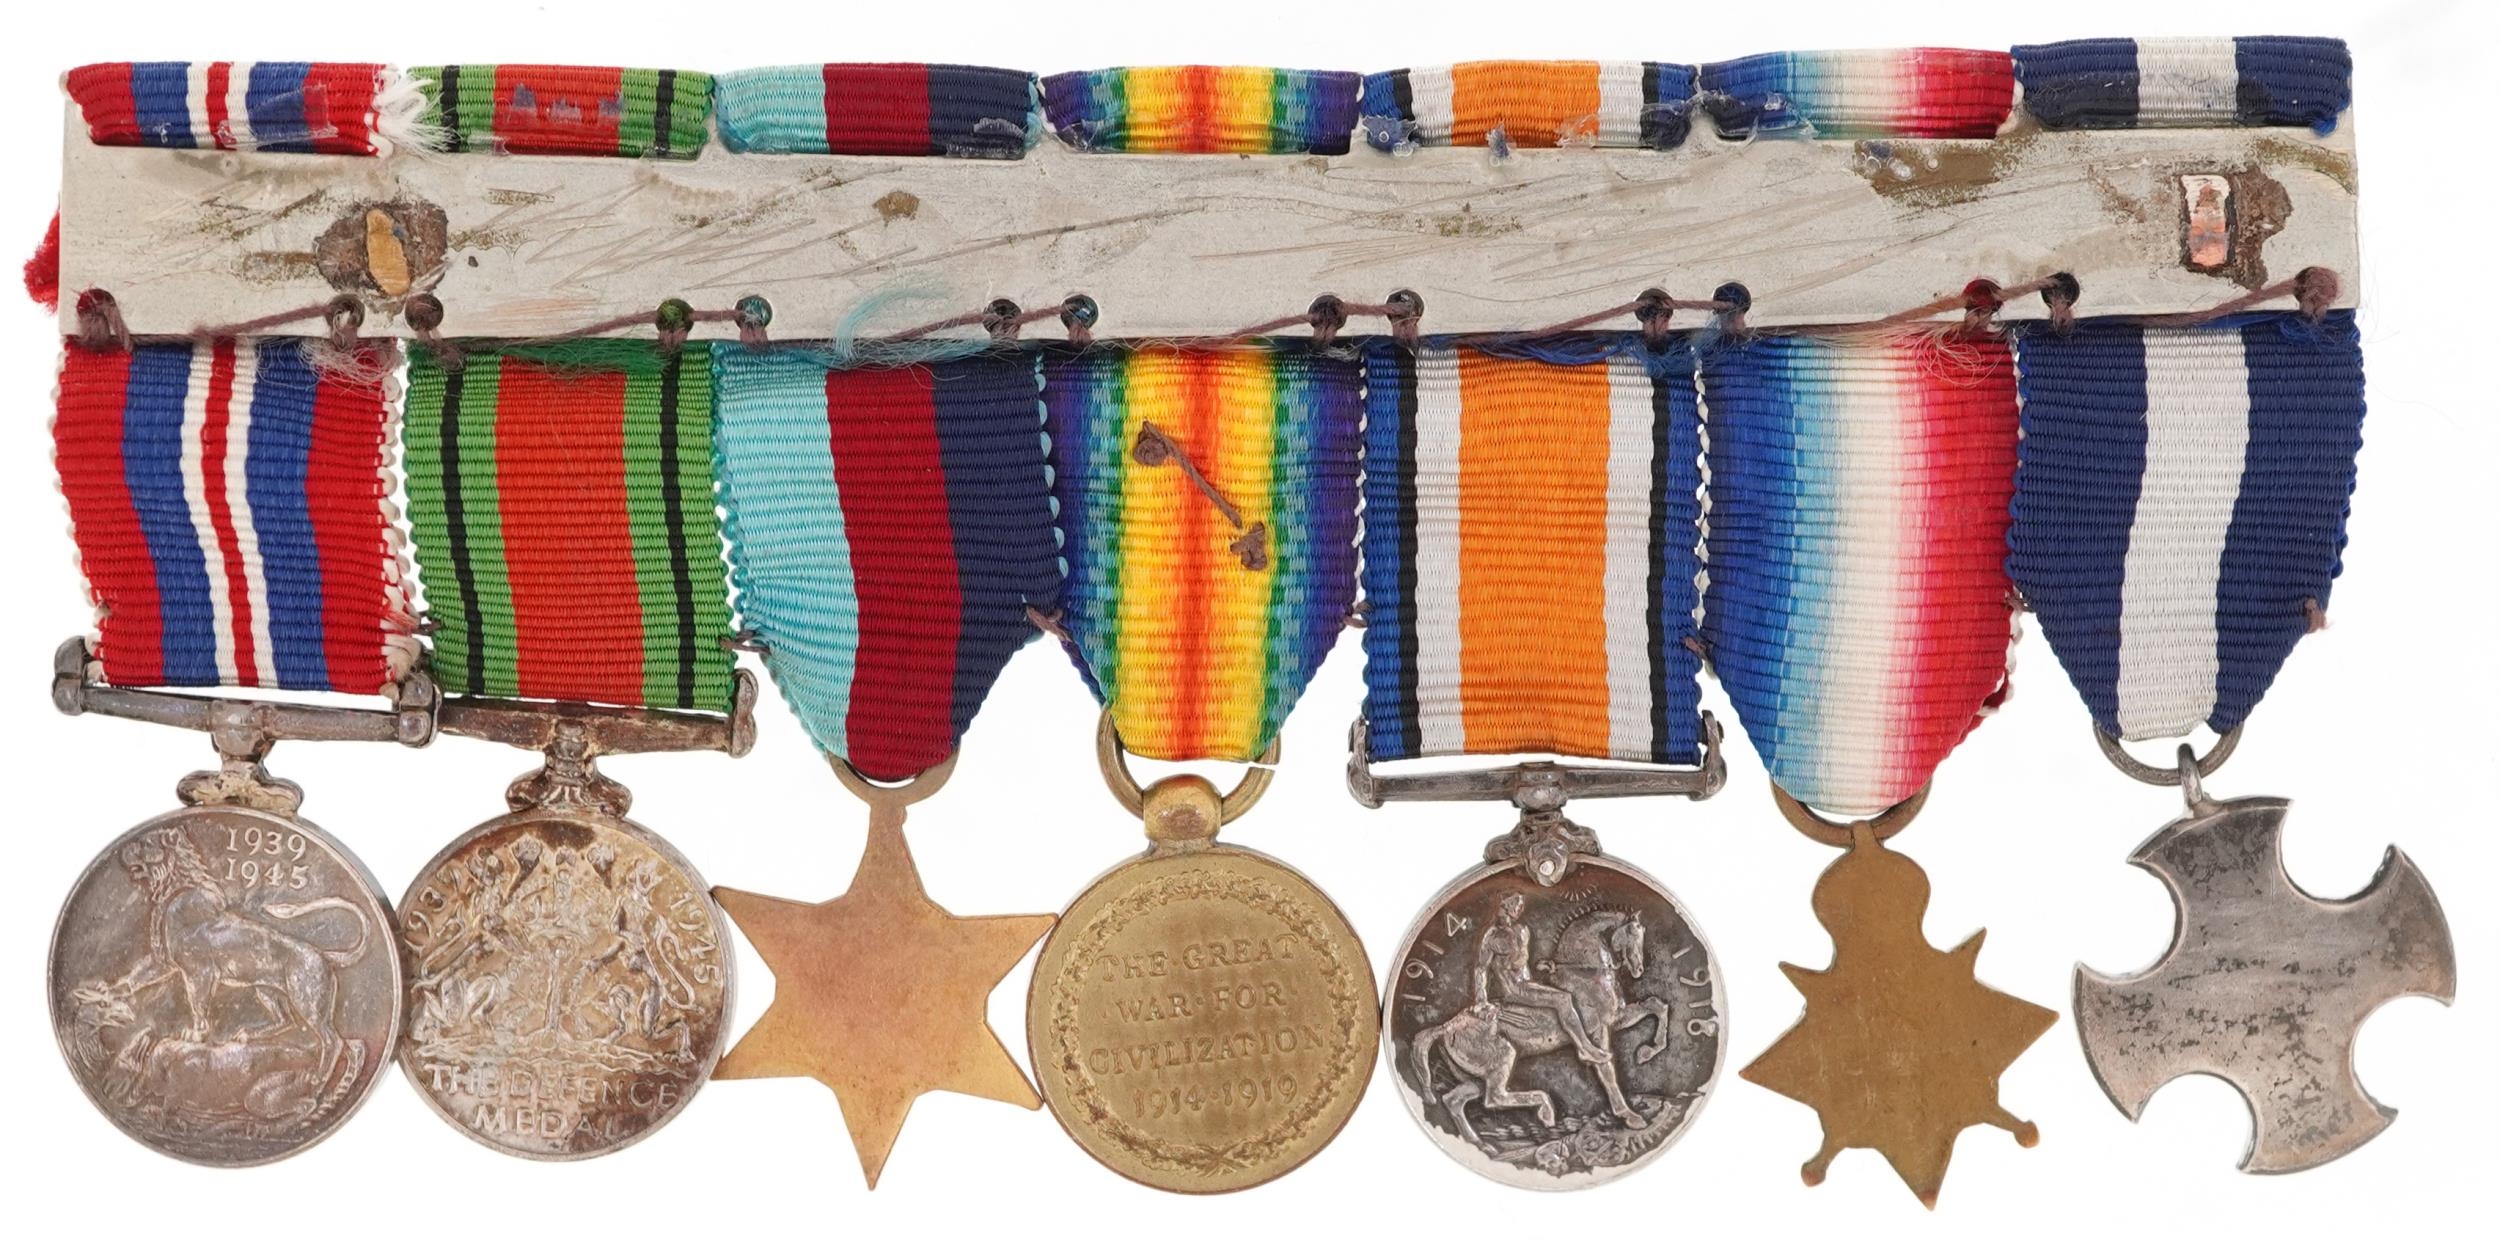 British military World War I dress medals including Distinguished Service Cross - Image 3 of 3